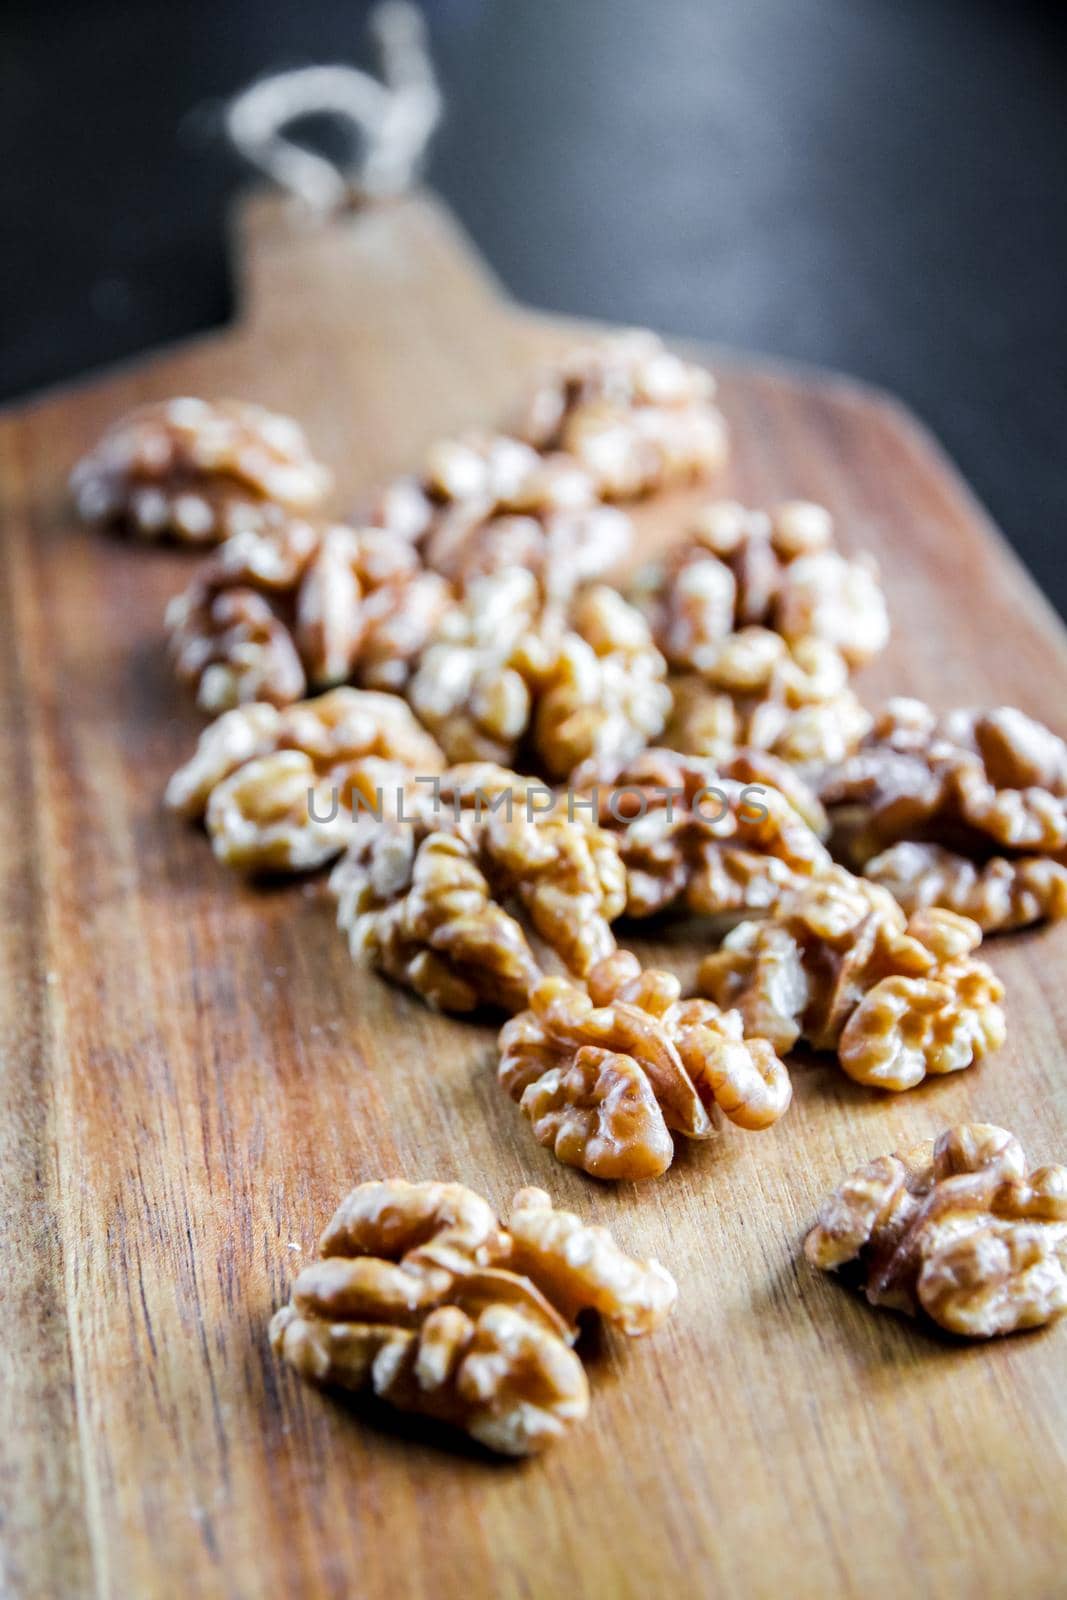 Walnut kernels on a cutting board by daboost